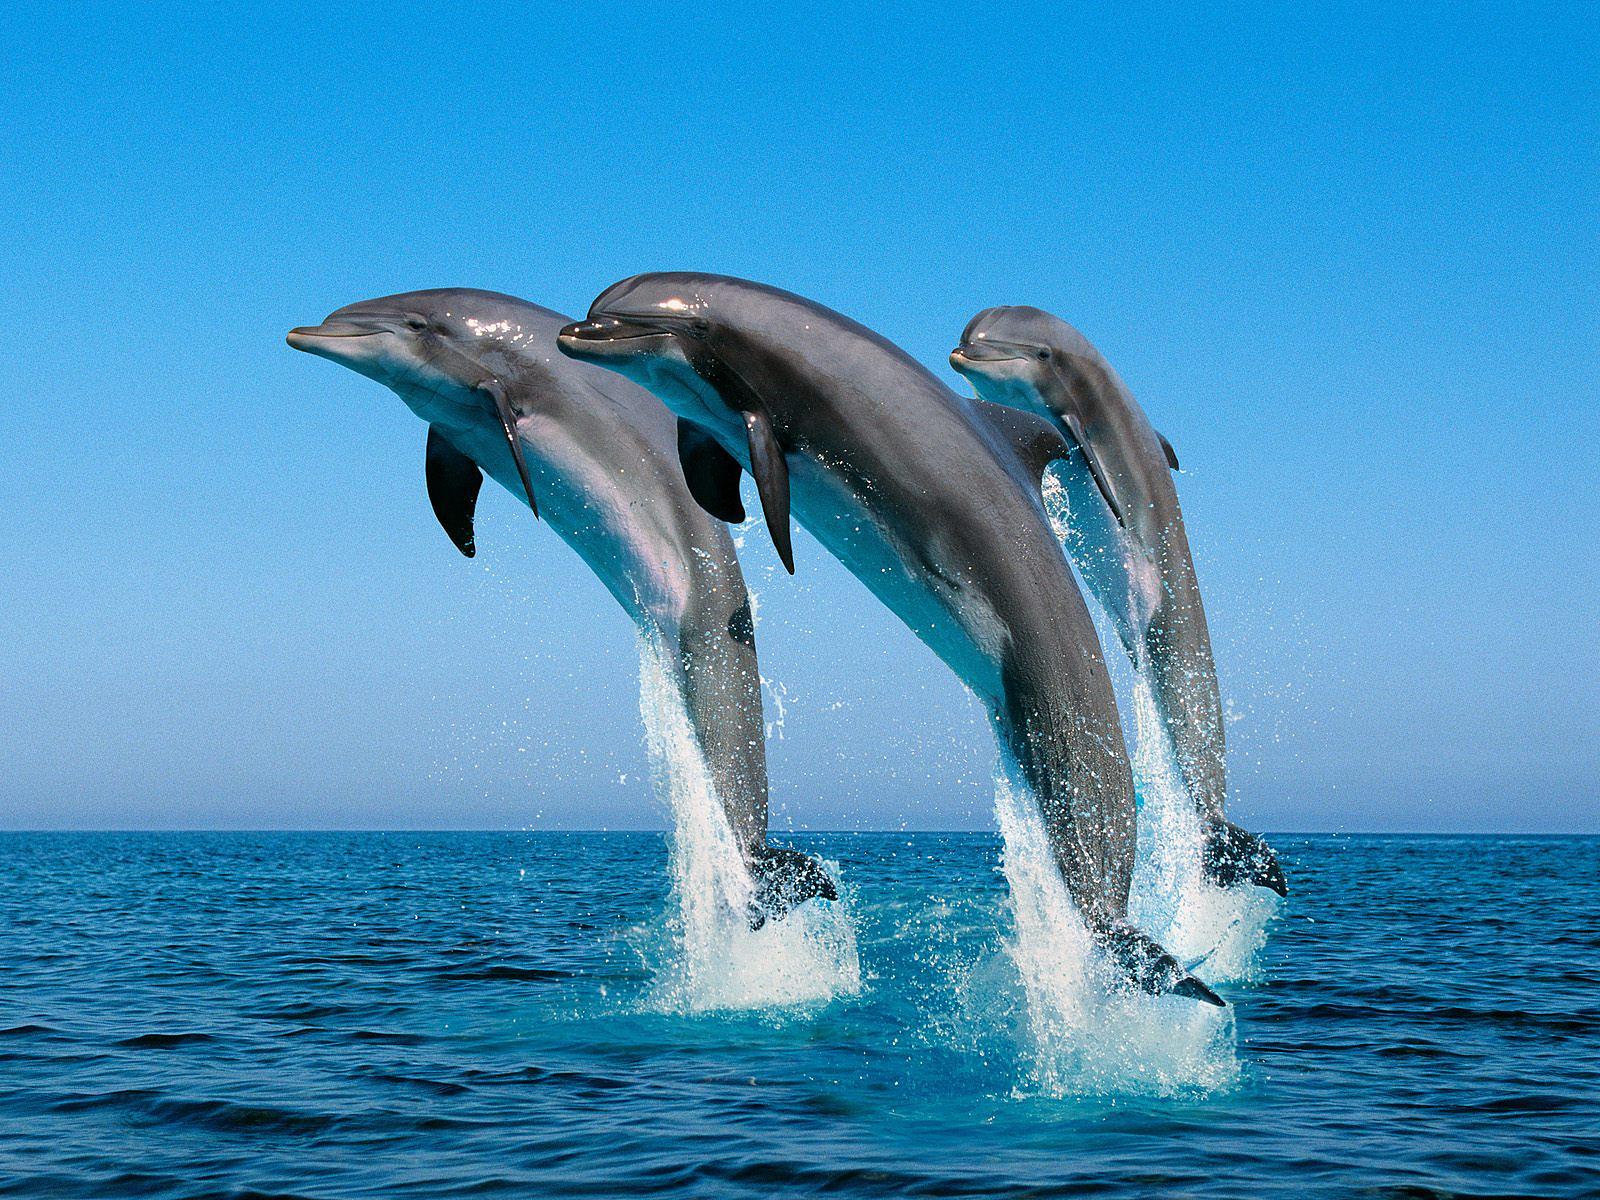 http://4.bp.blogspot.com/-LBXZWbI-1OU/TjlJV9TWx6I/AAAAAAAADWA/N1pYR4lQ_JM/s1600/Dolphin-Jumping_Bottlenose_Dolphins.jpg